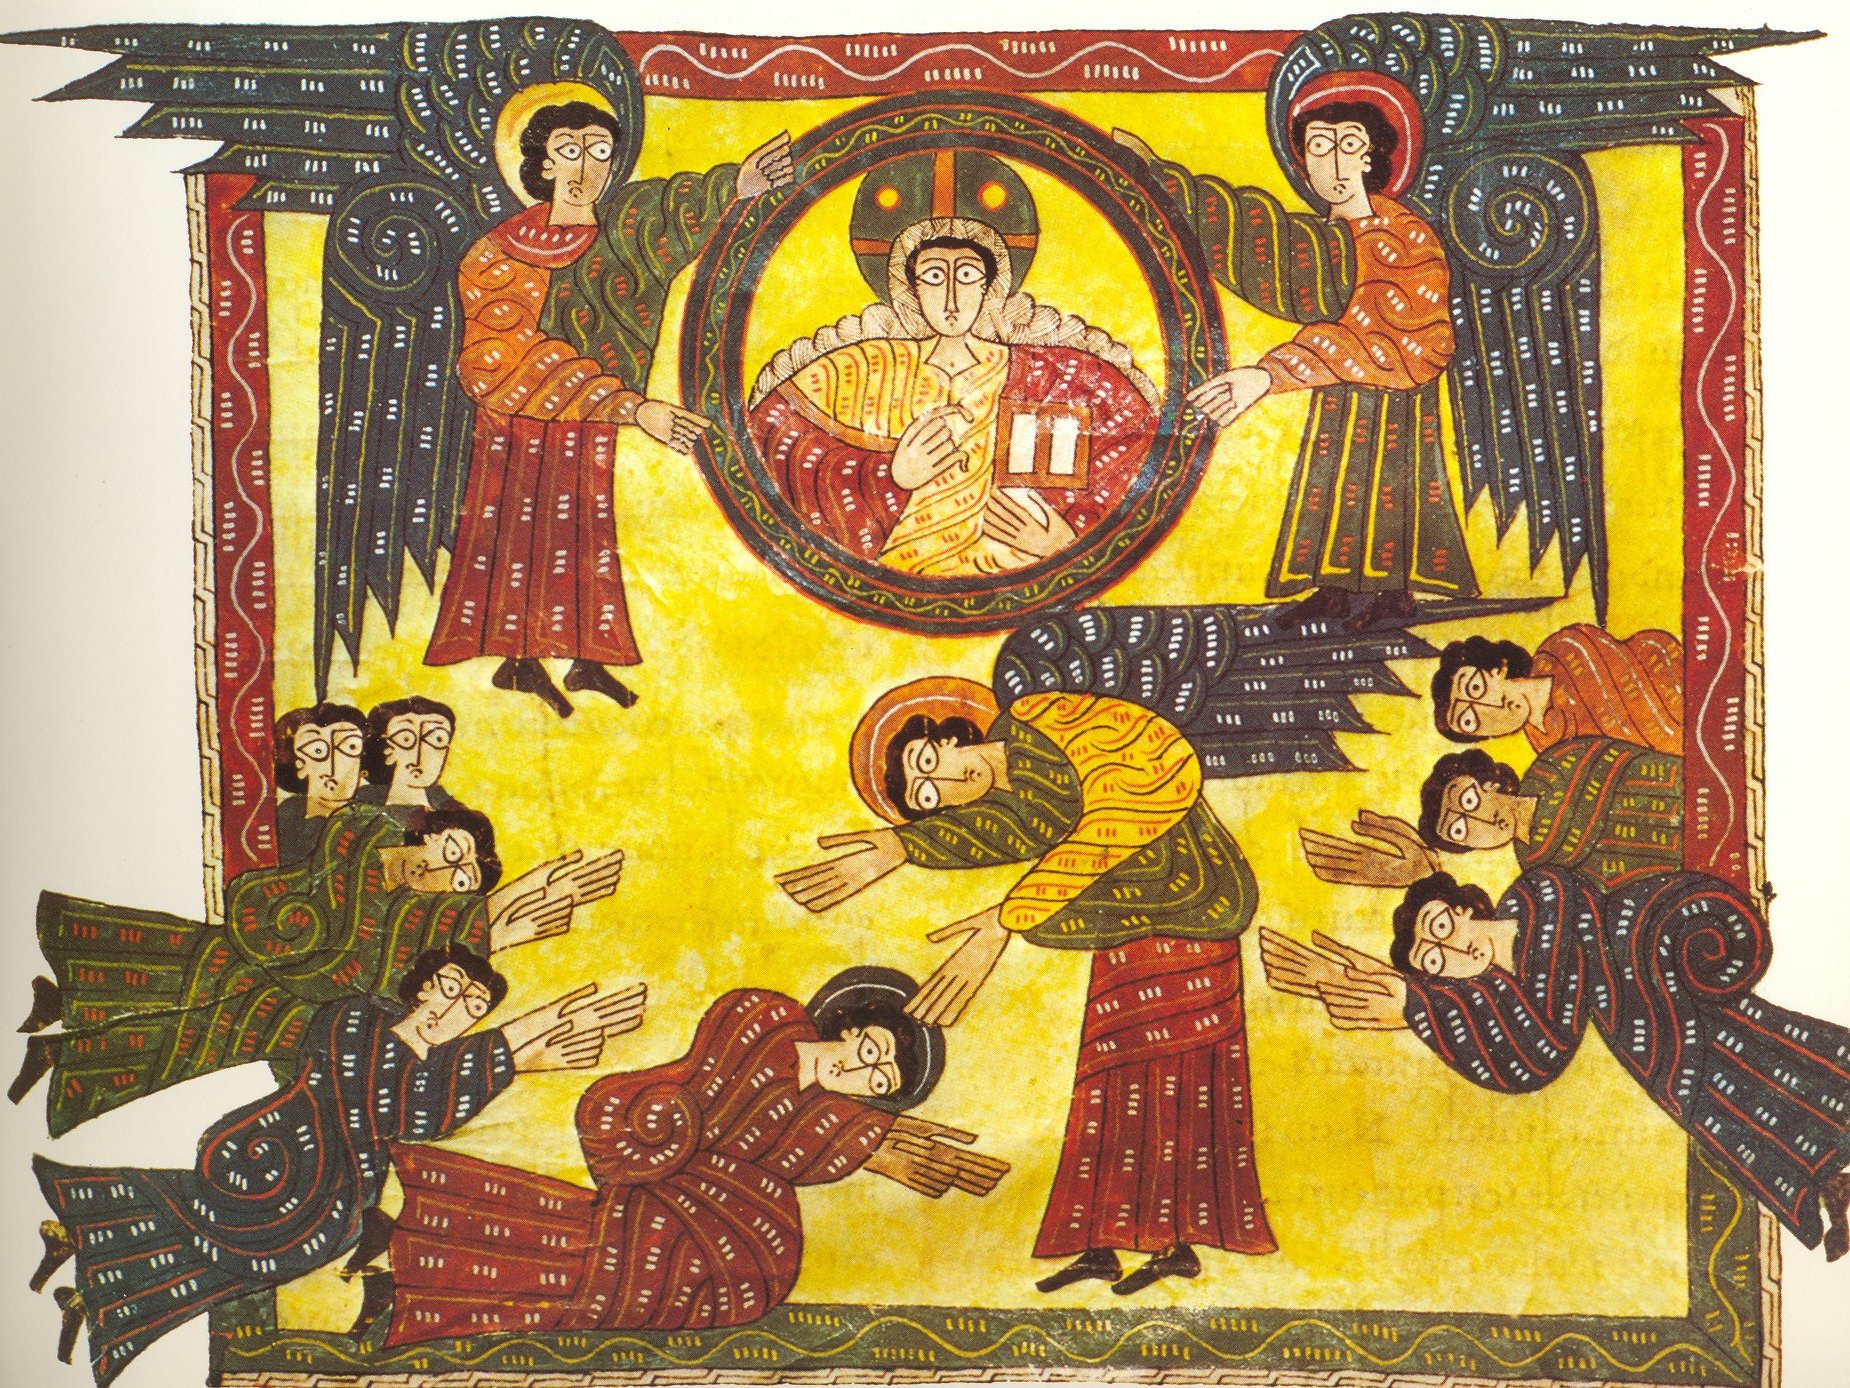 Beatus de l’Escorial – Adoration divine et Théophanie finale (Ap 22), folio 142v.